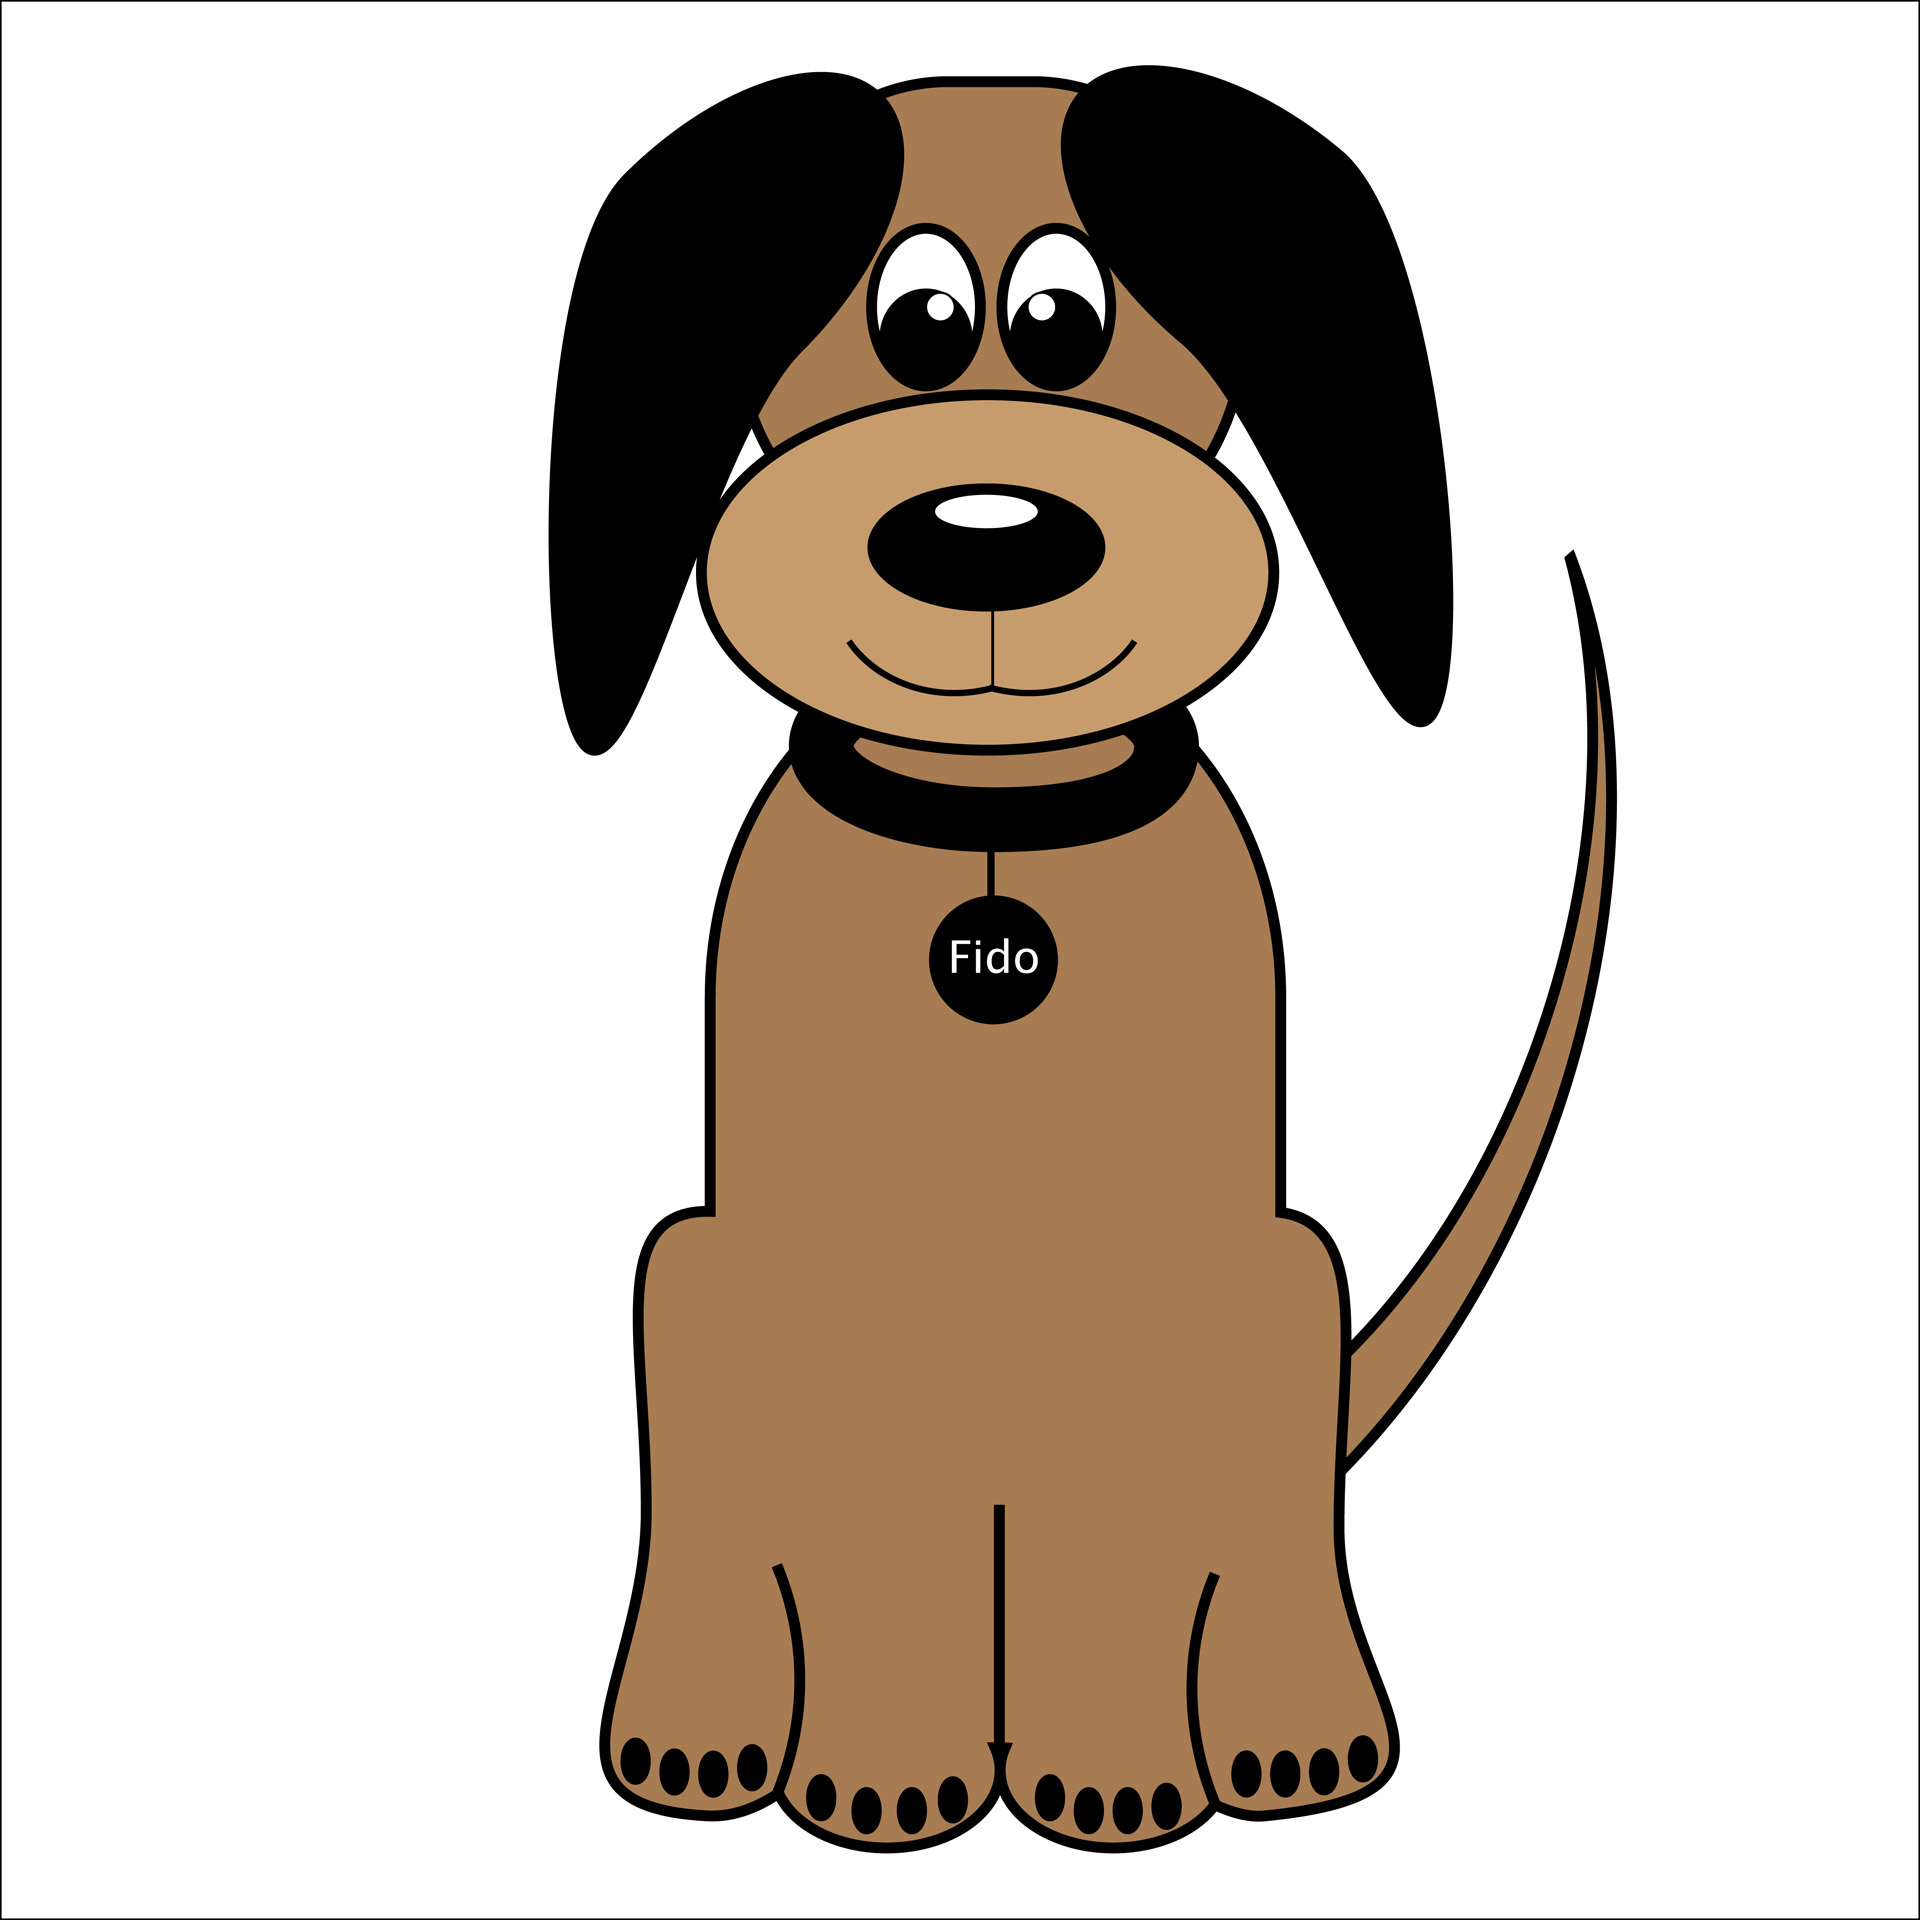 Cute sitting brown dog cartoon illustration